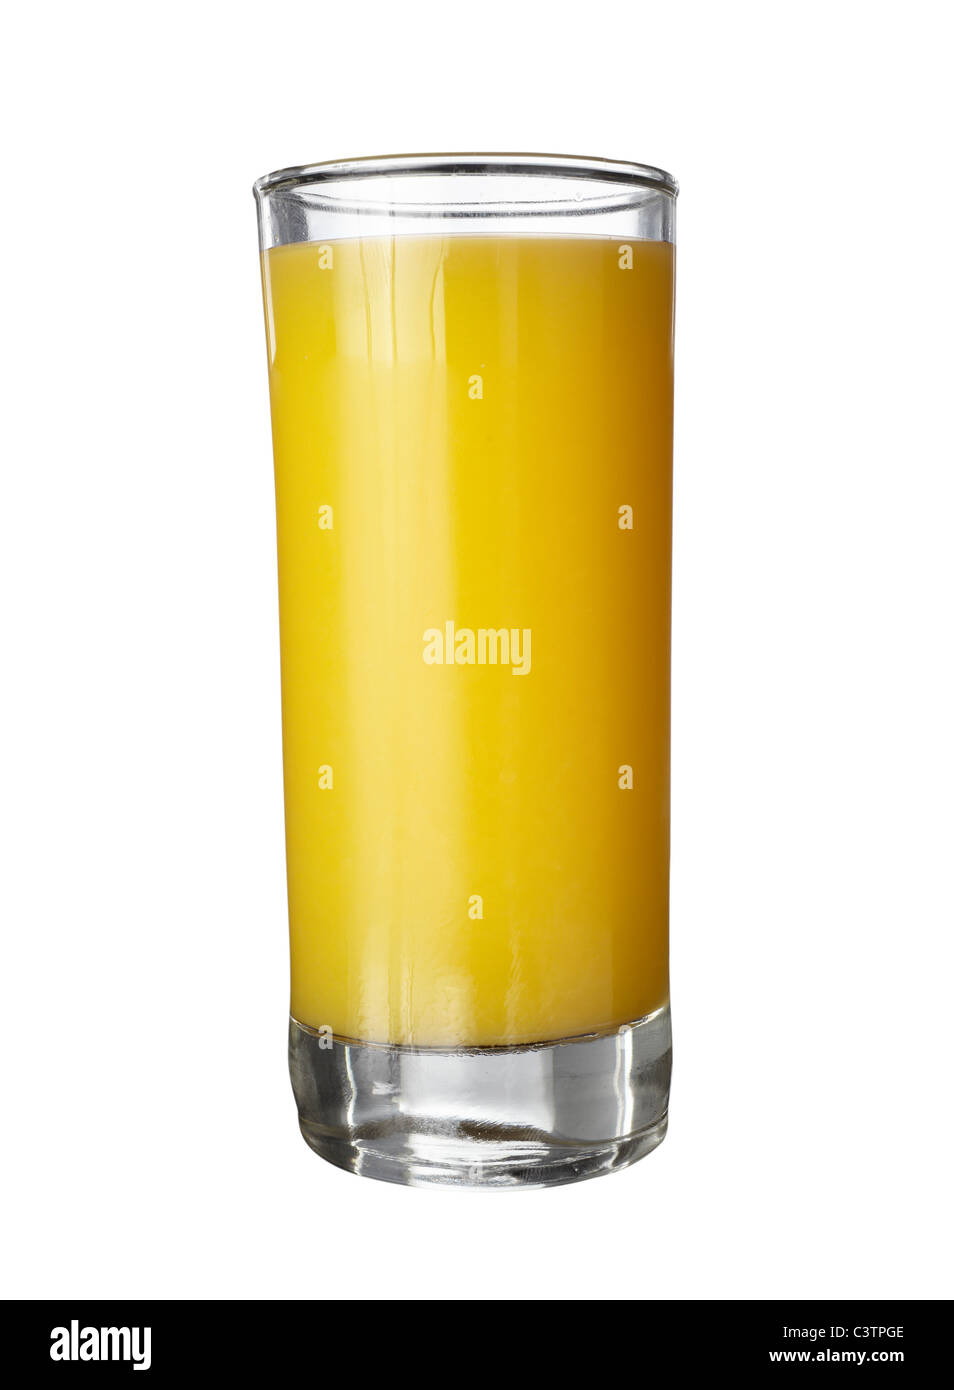 El jugo de naranja y limón Foto de stock